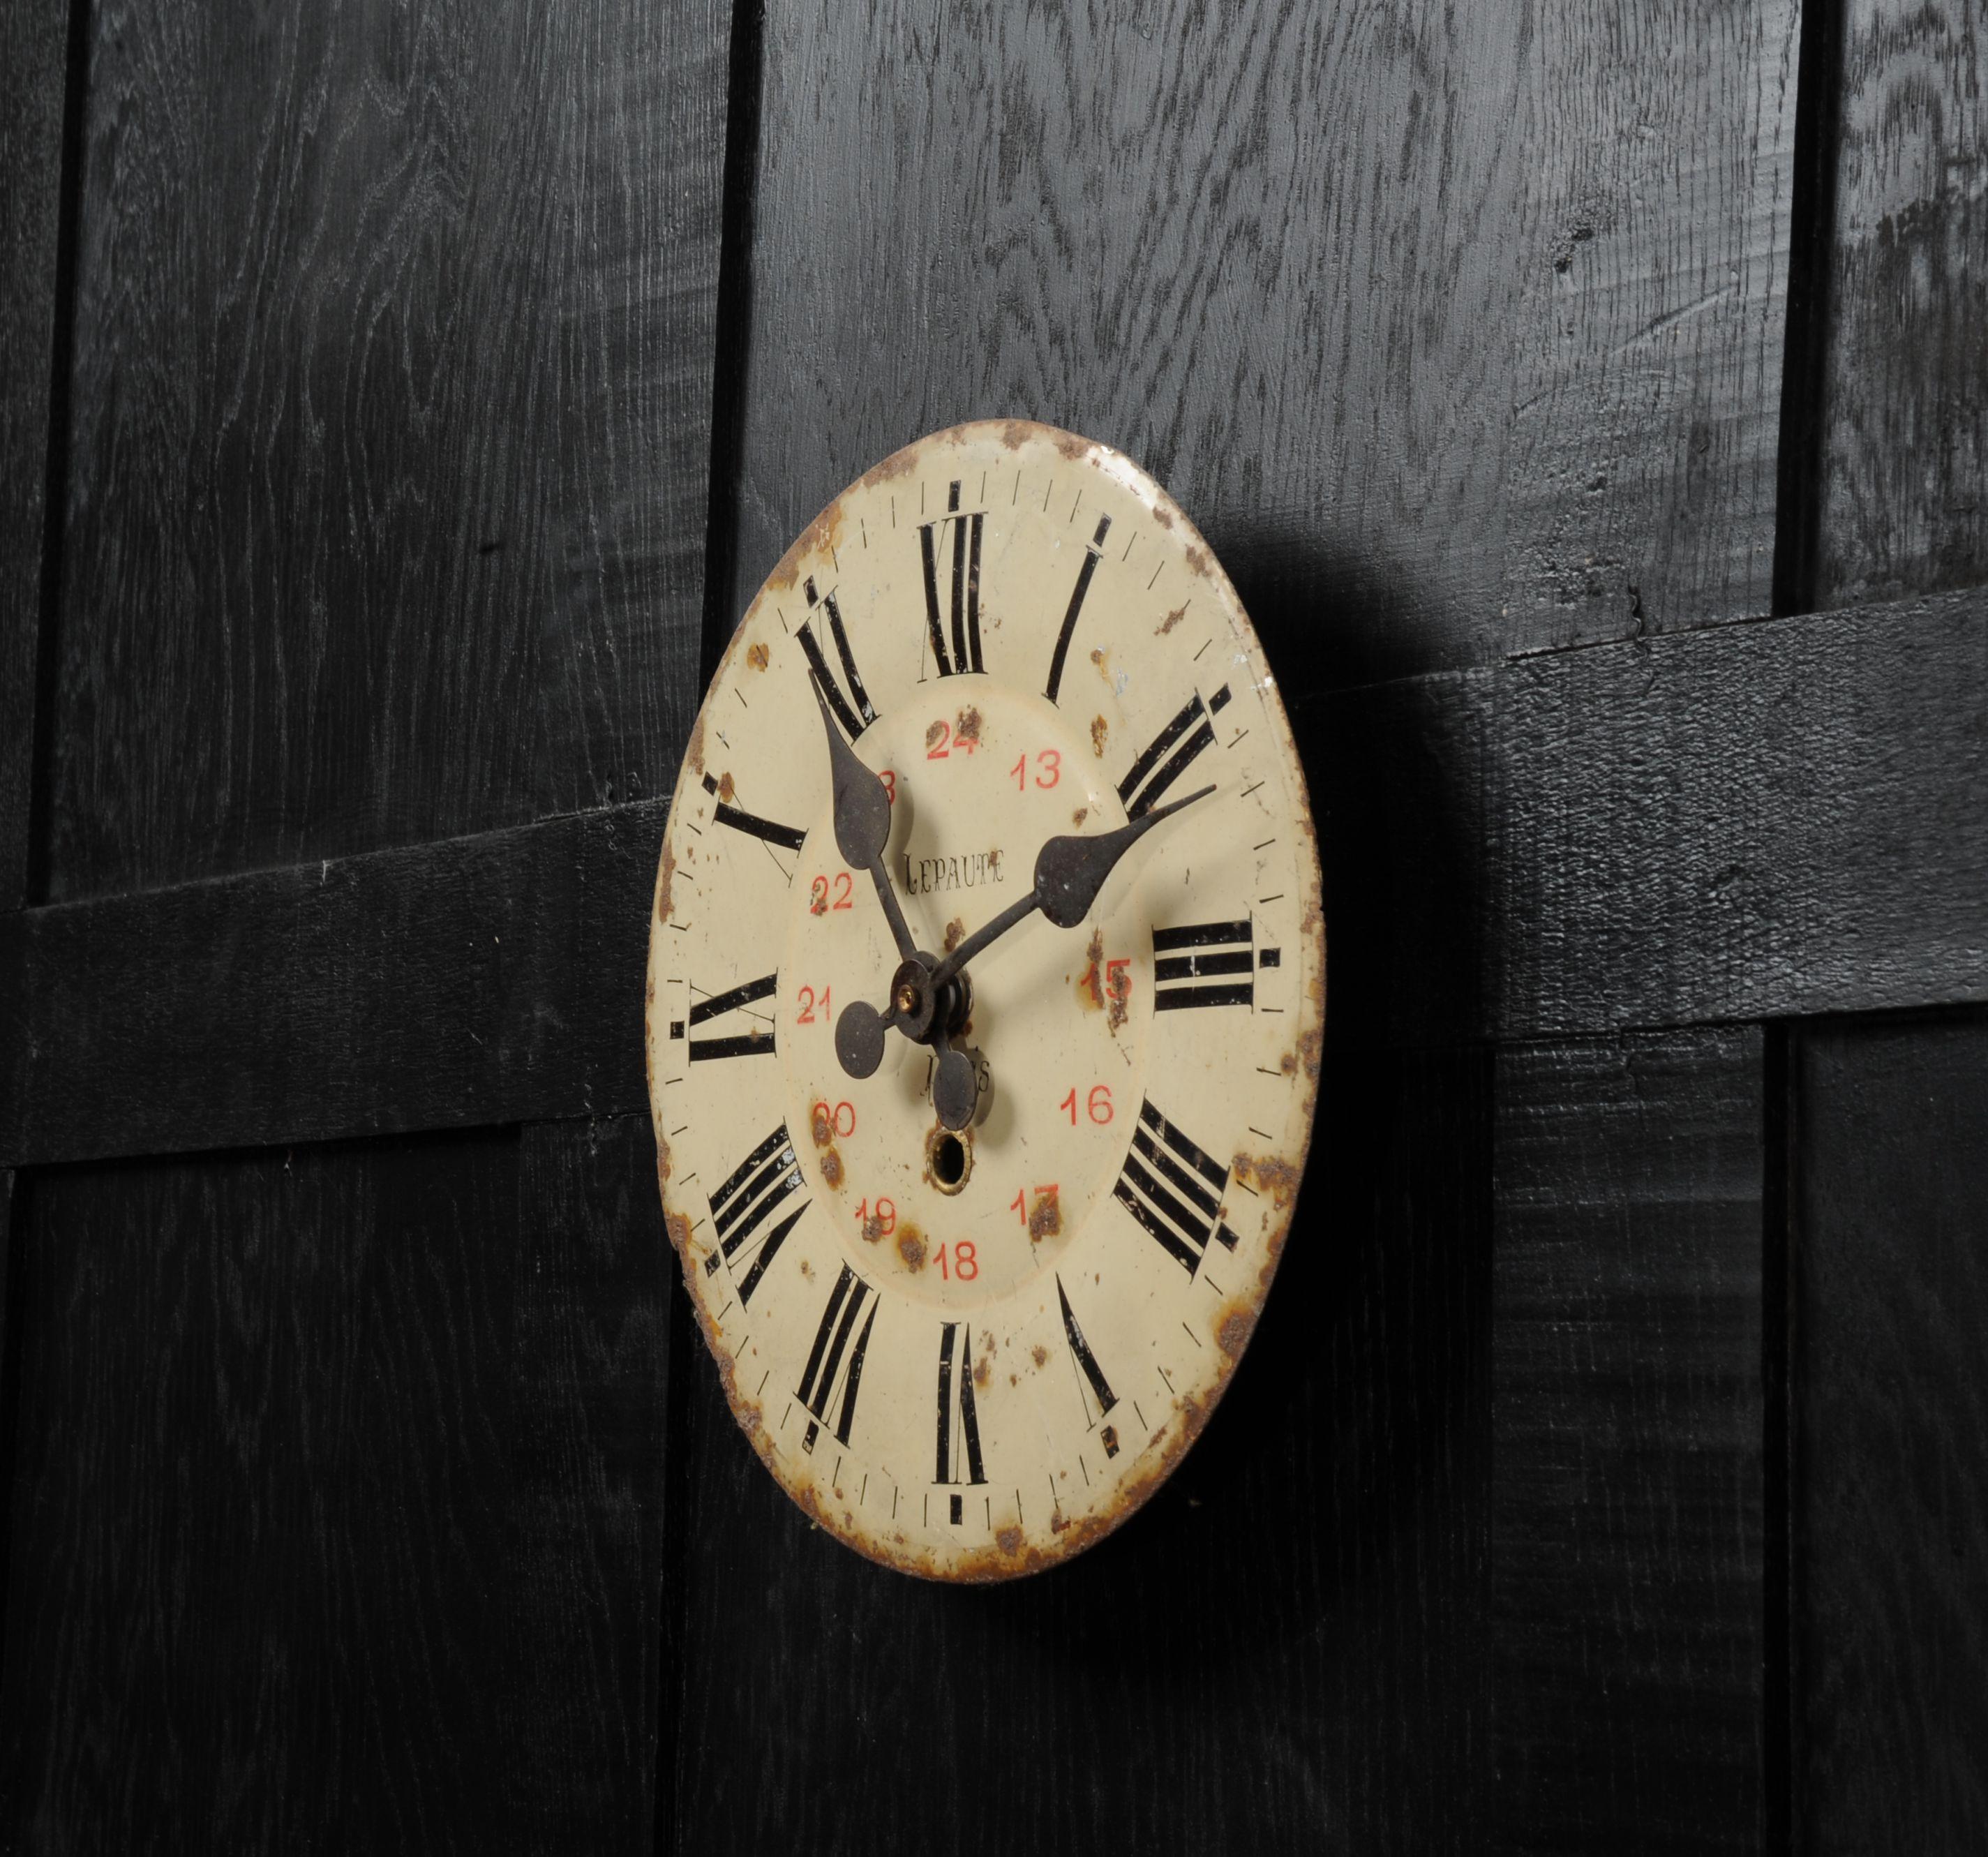 Steel Antique French Clock Dial Face - Lepaute Paris - Industrial/Railway